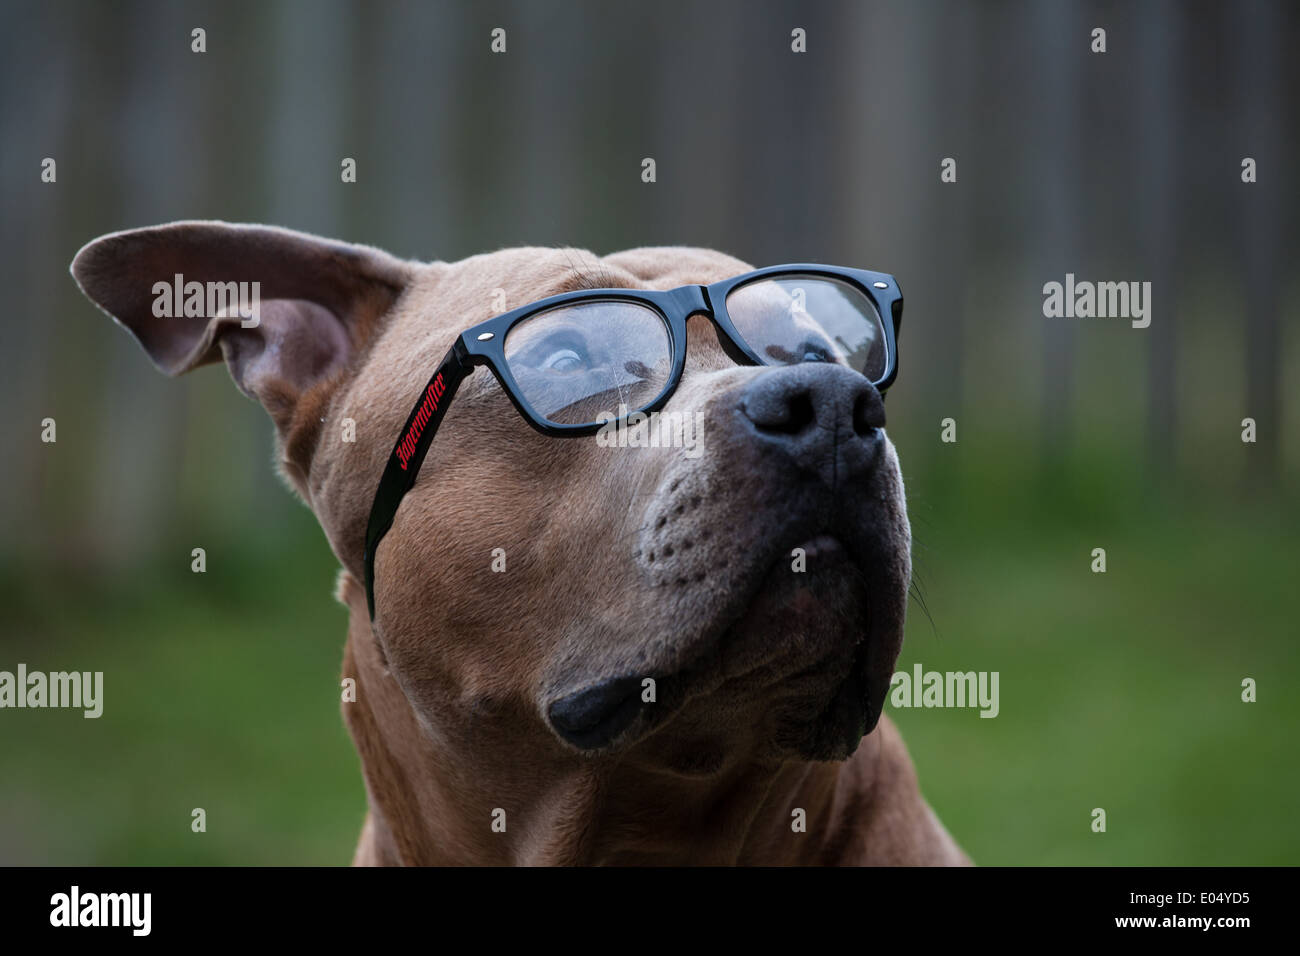 Dog wearing glasses Stock Photo - Alamy